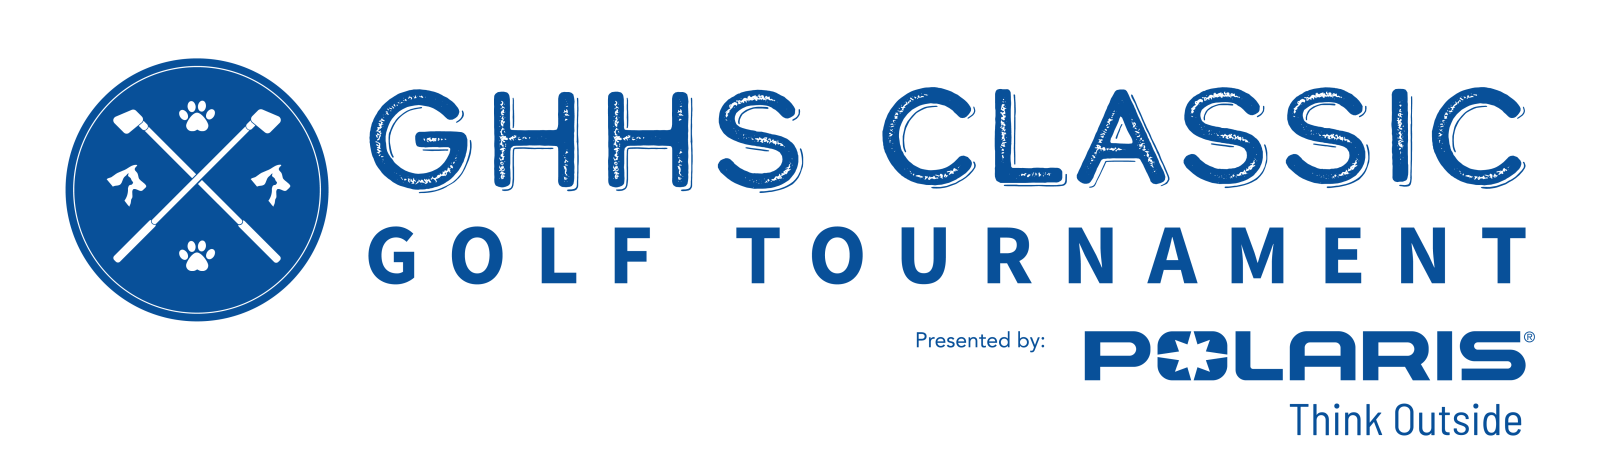 ghhs-golf-logo-blue-presentedbyPolaris%403x.png